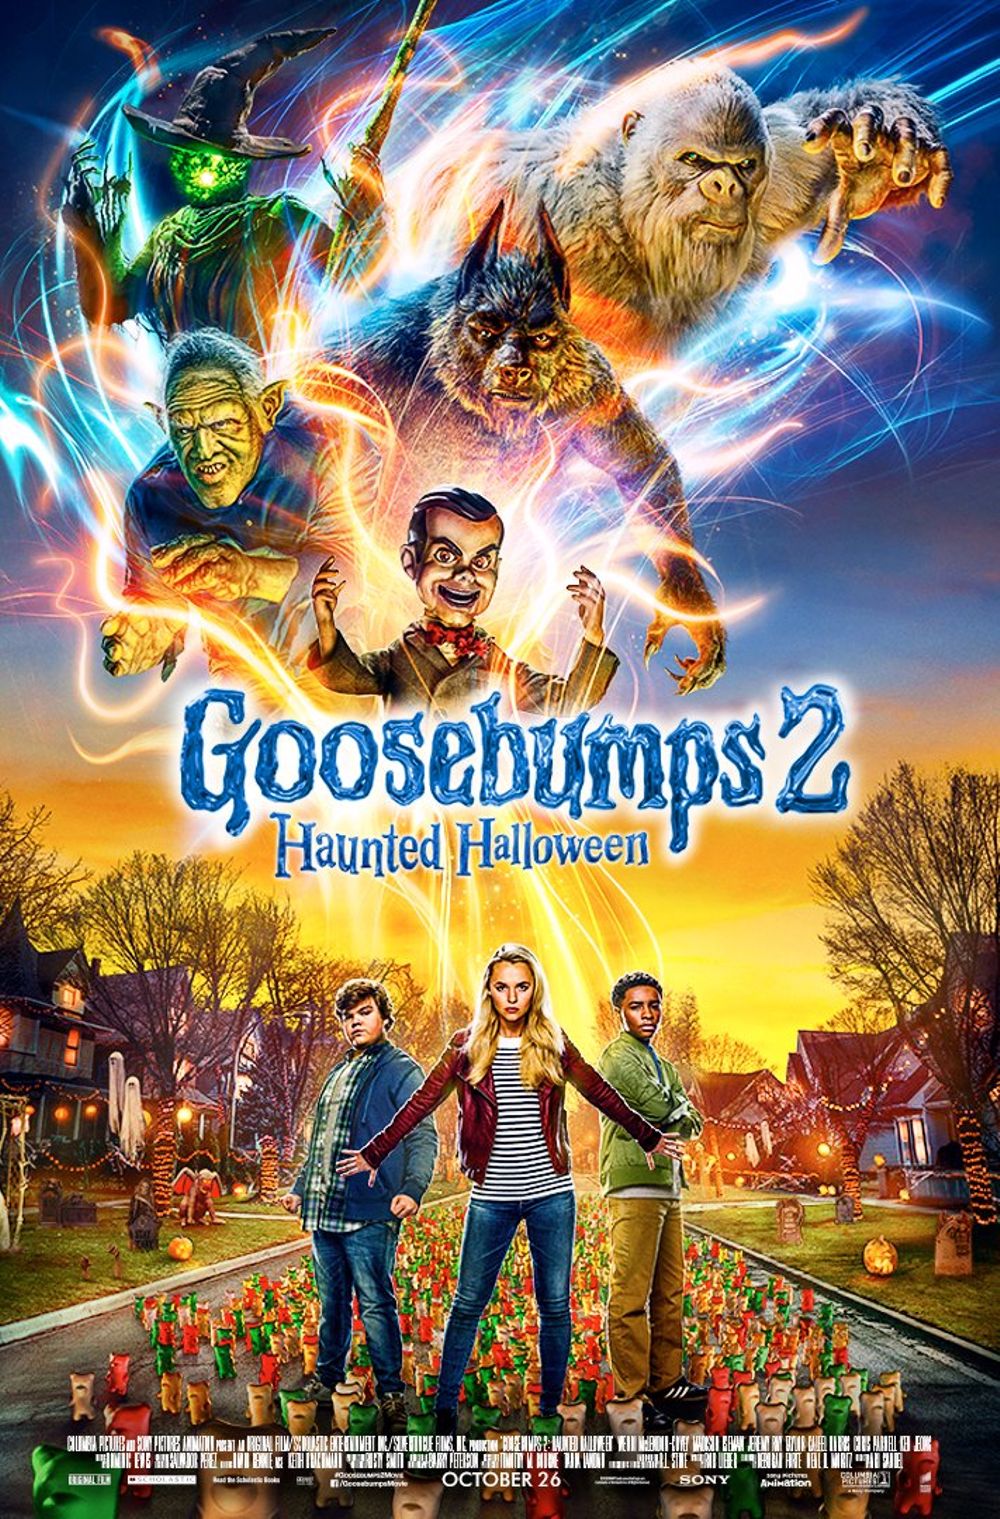 Goosebumps 2: Haunted Halloween Movie Review